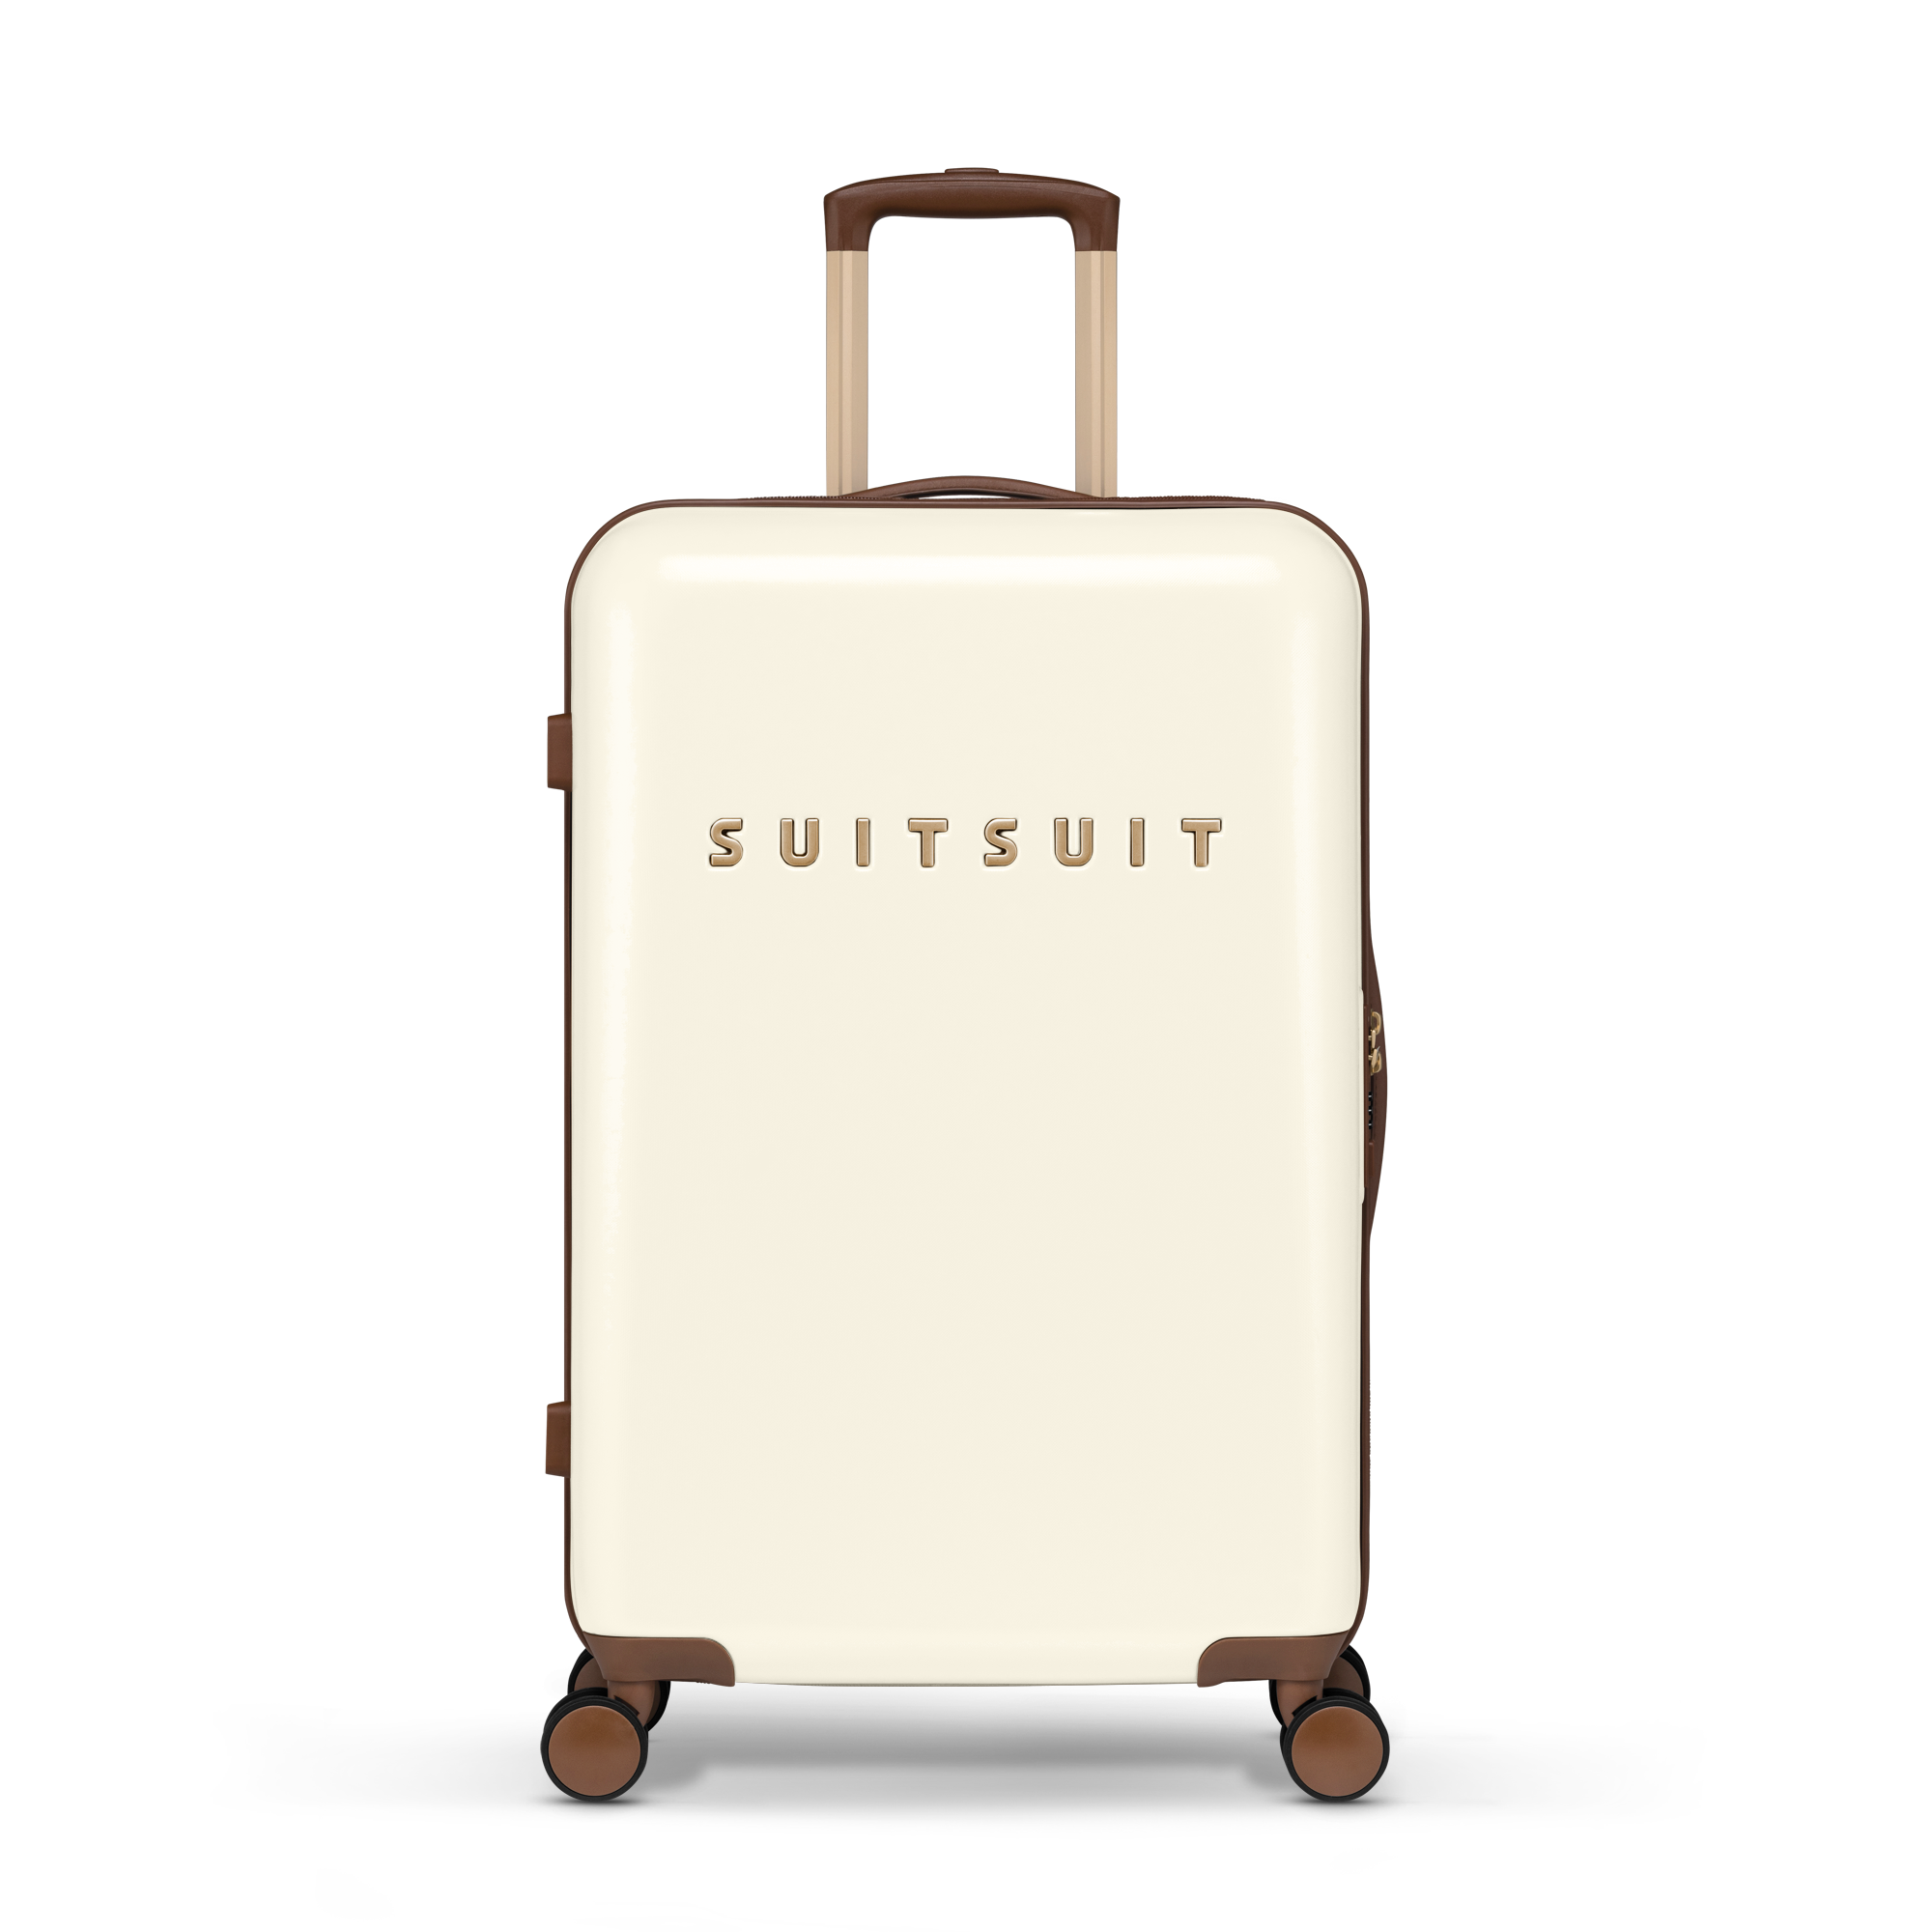 SUITSUIT - Fab Seventies - Antique White - Reiskoffer (66 cm)